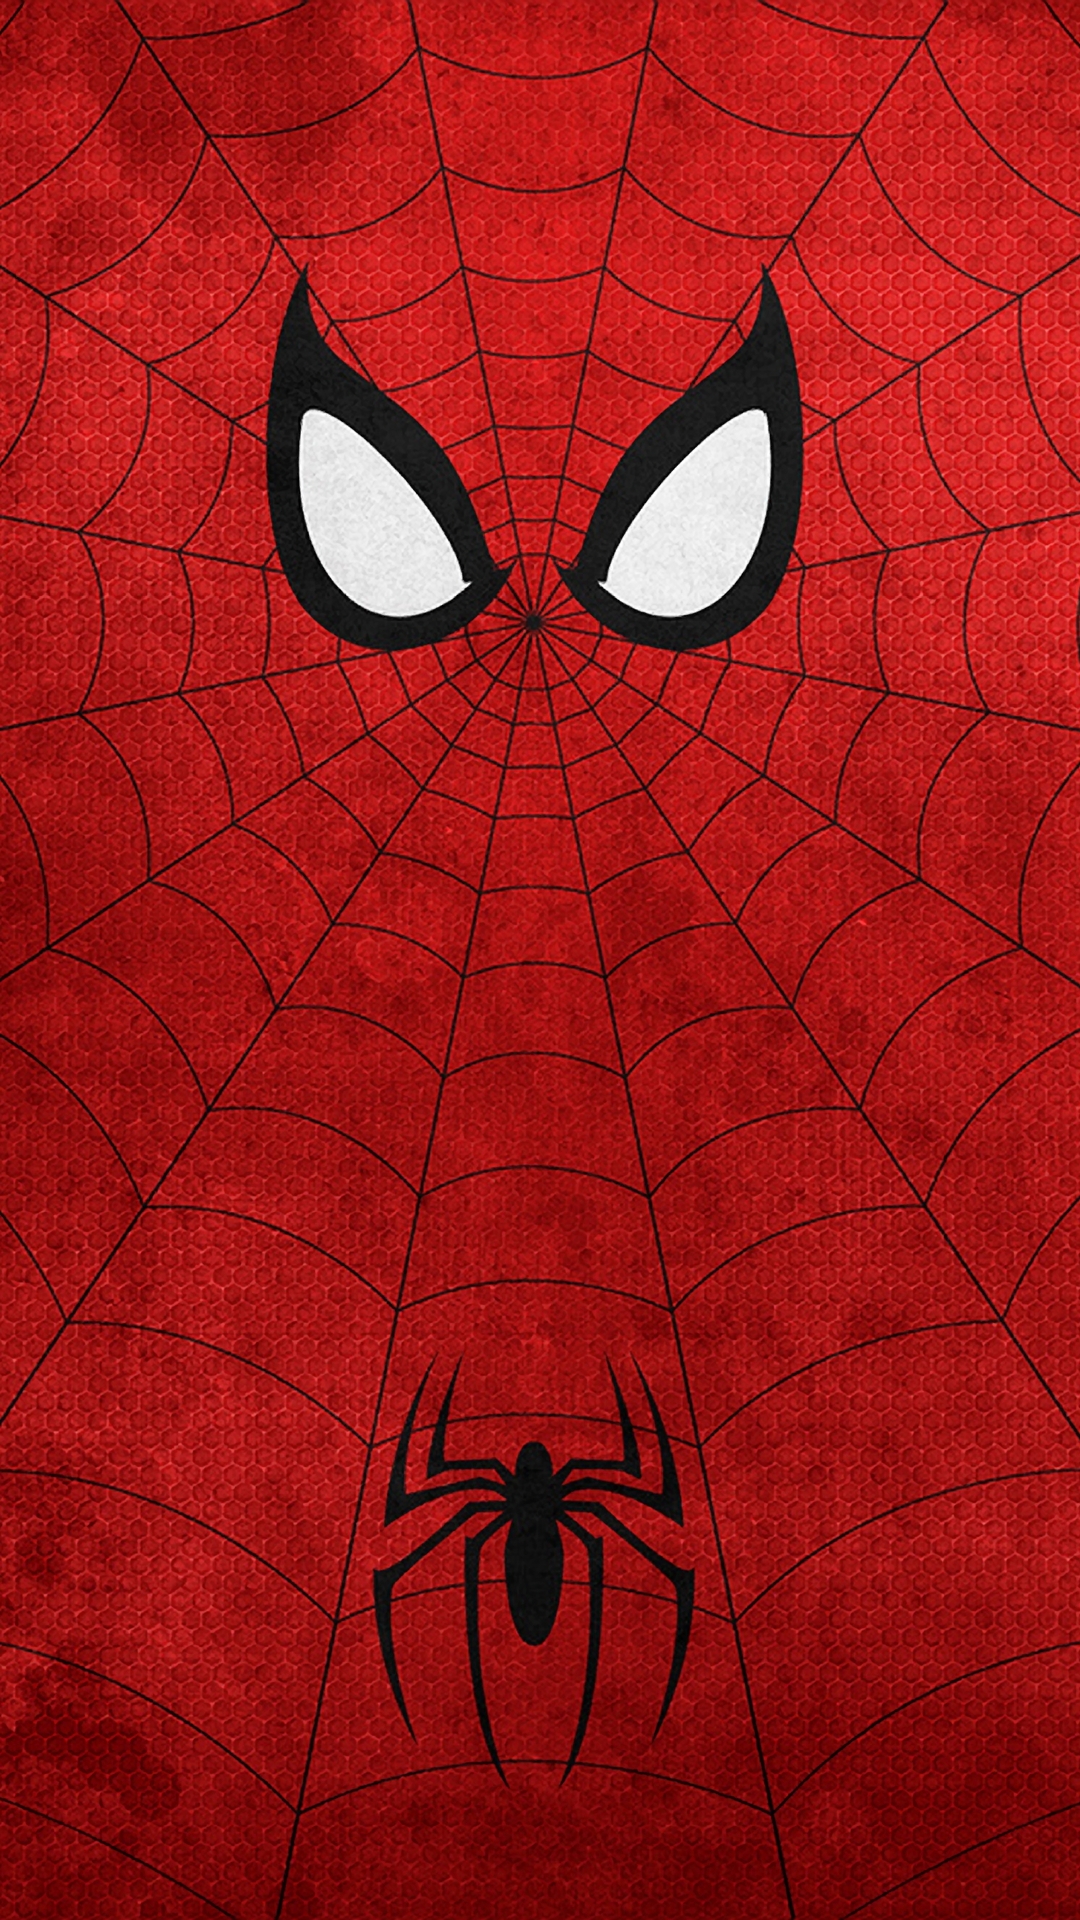 Spiderman Wallpaper For Mobile Group